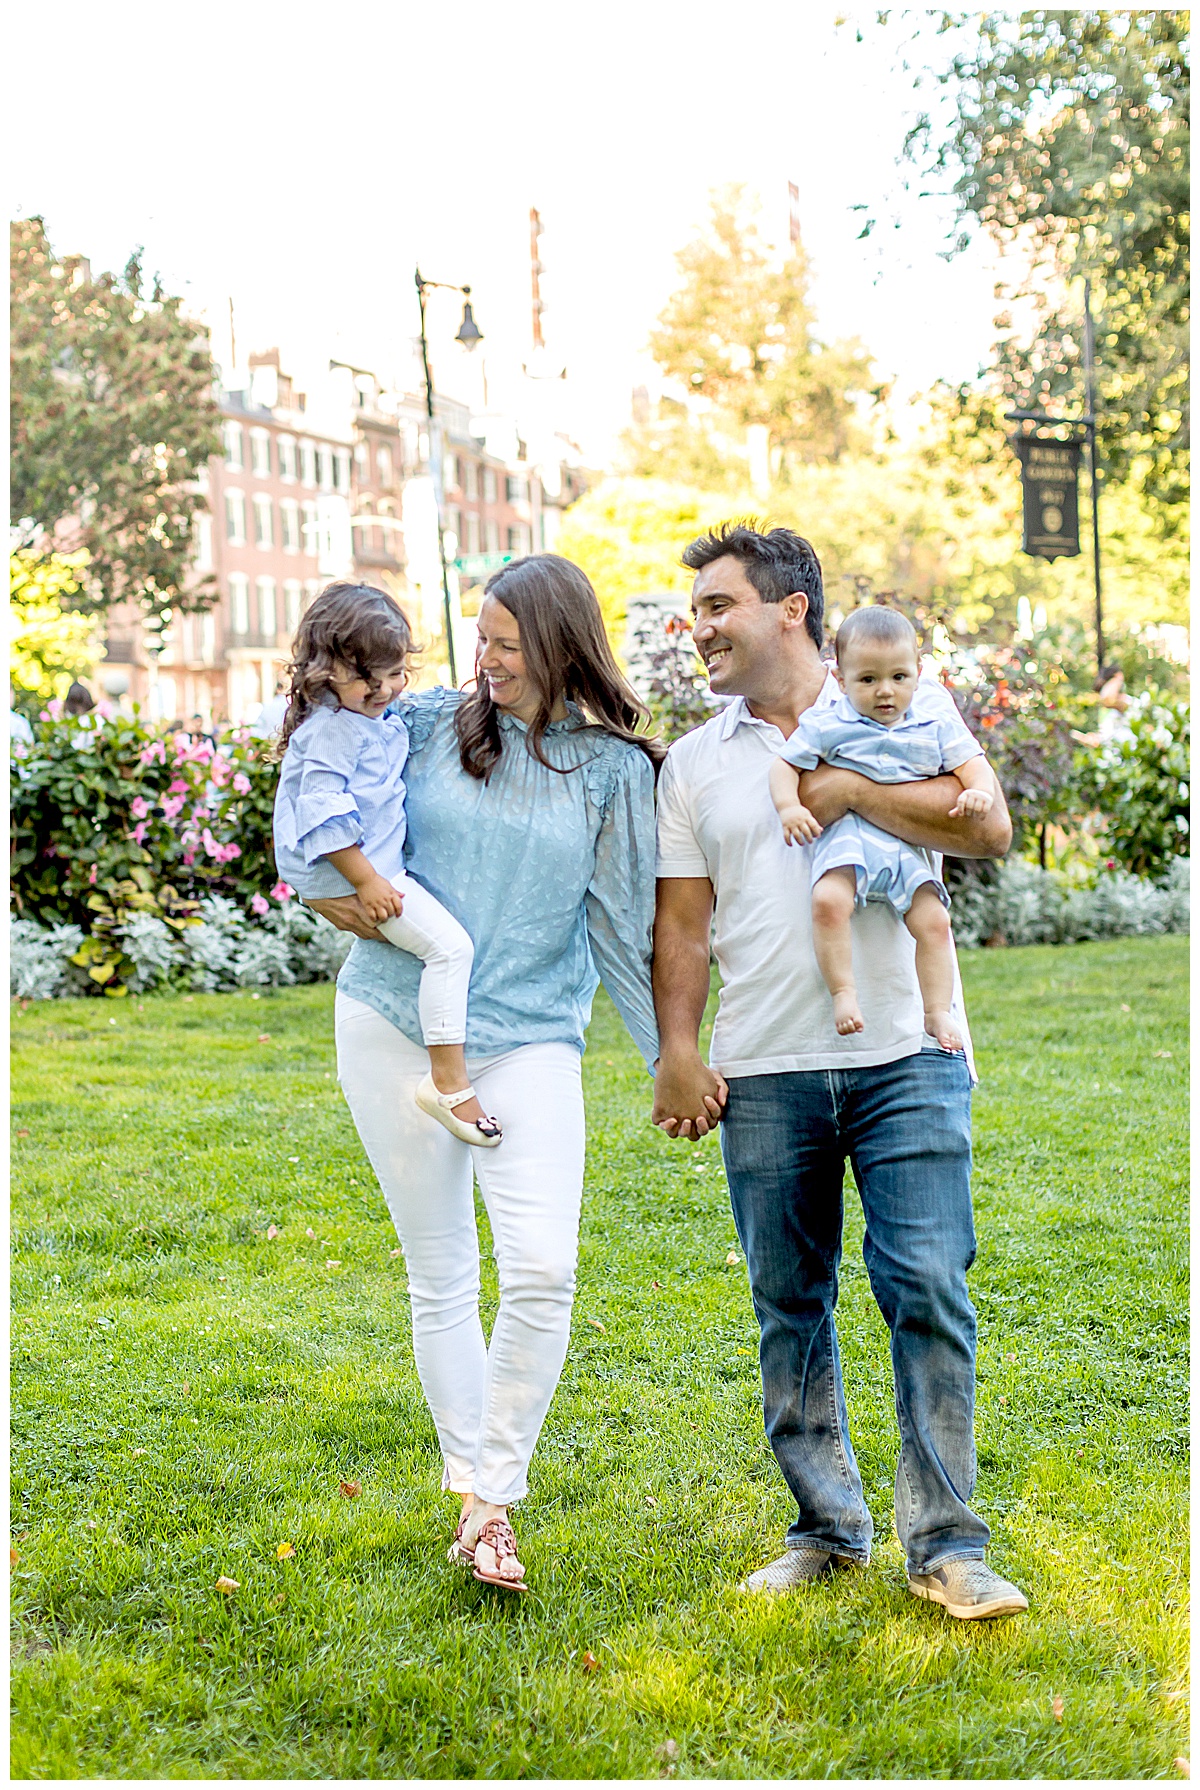 Enjoy these Family Photos at Boston Public Garden